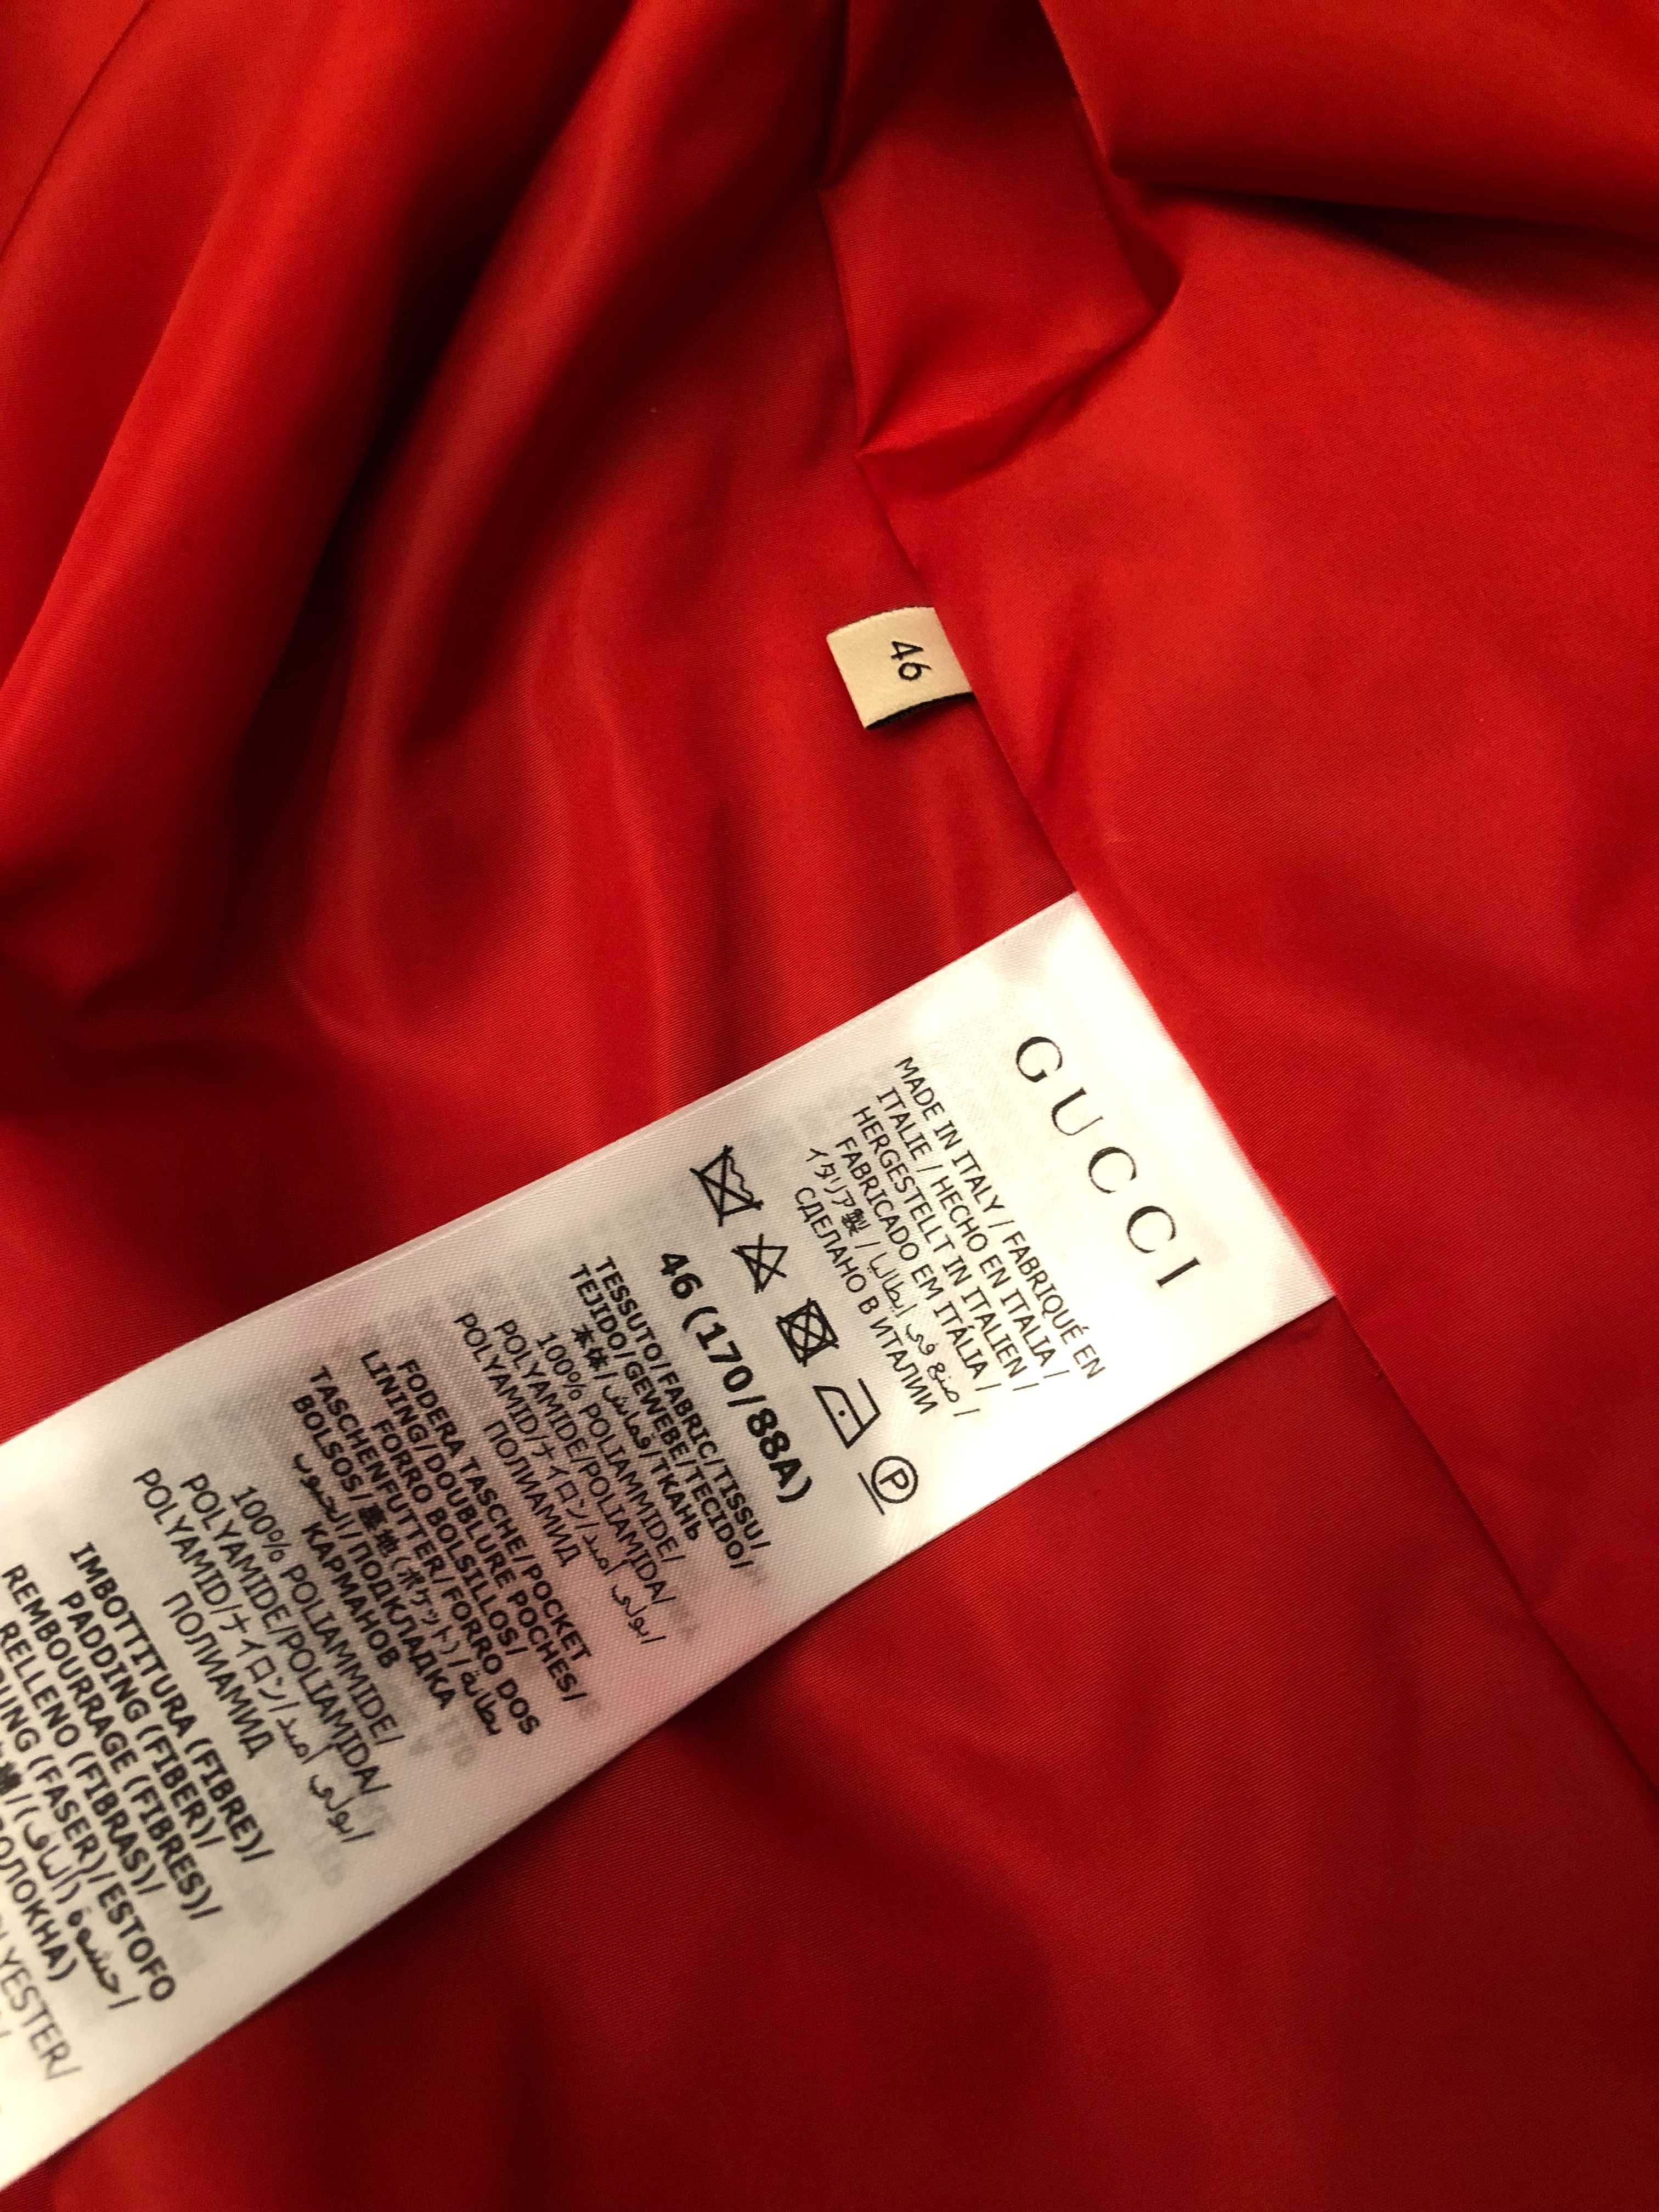 Gucci vs Adidas geaca fas, M-L oversize, originala, retail 1450 euro